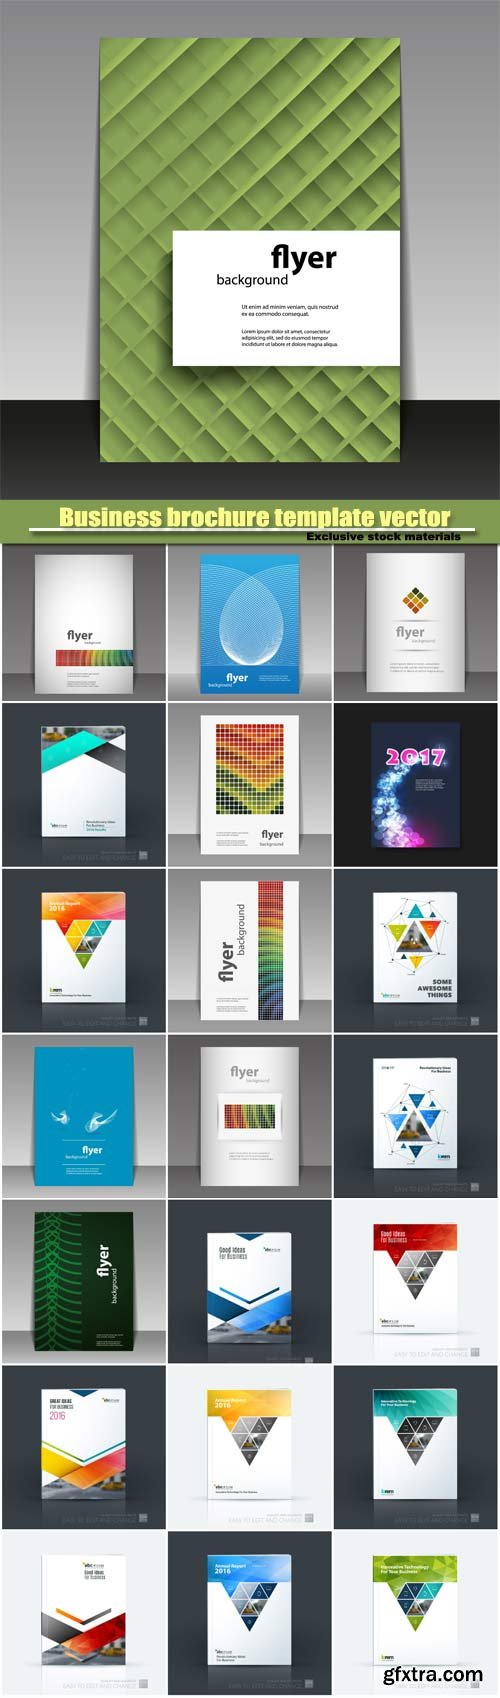 Business brochure template vector design, abstract creative design